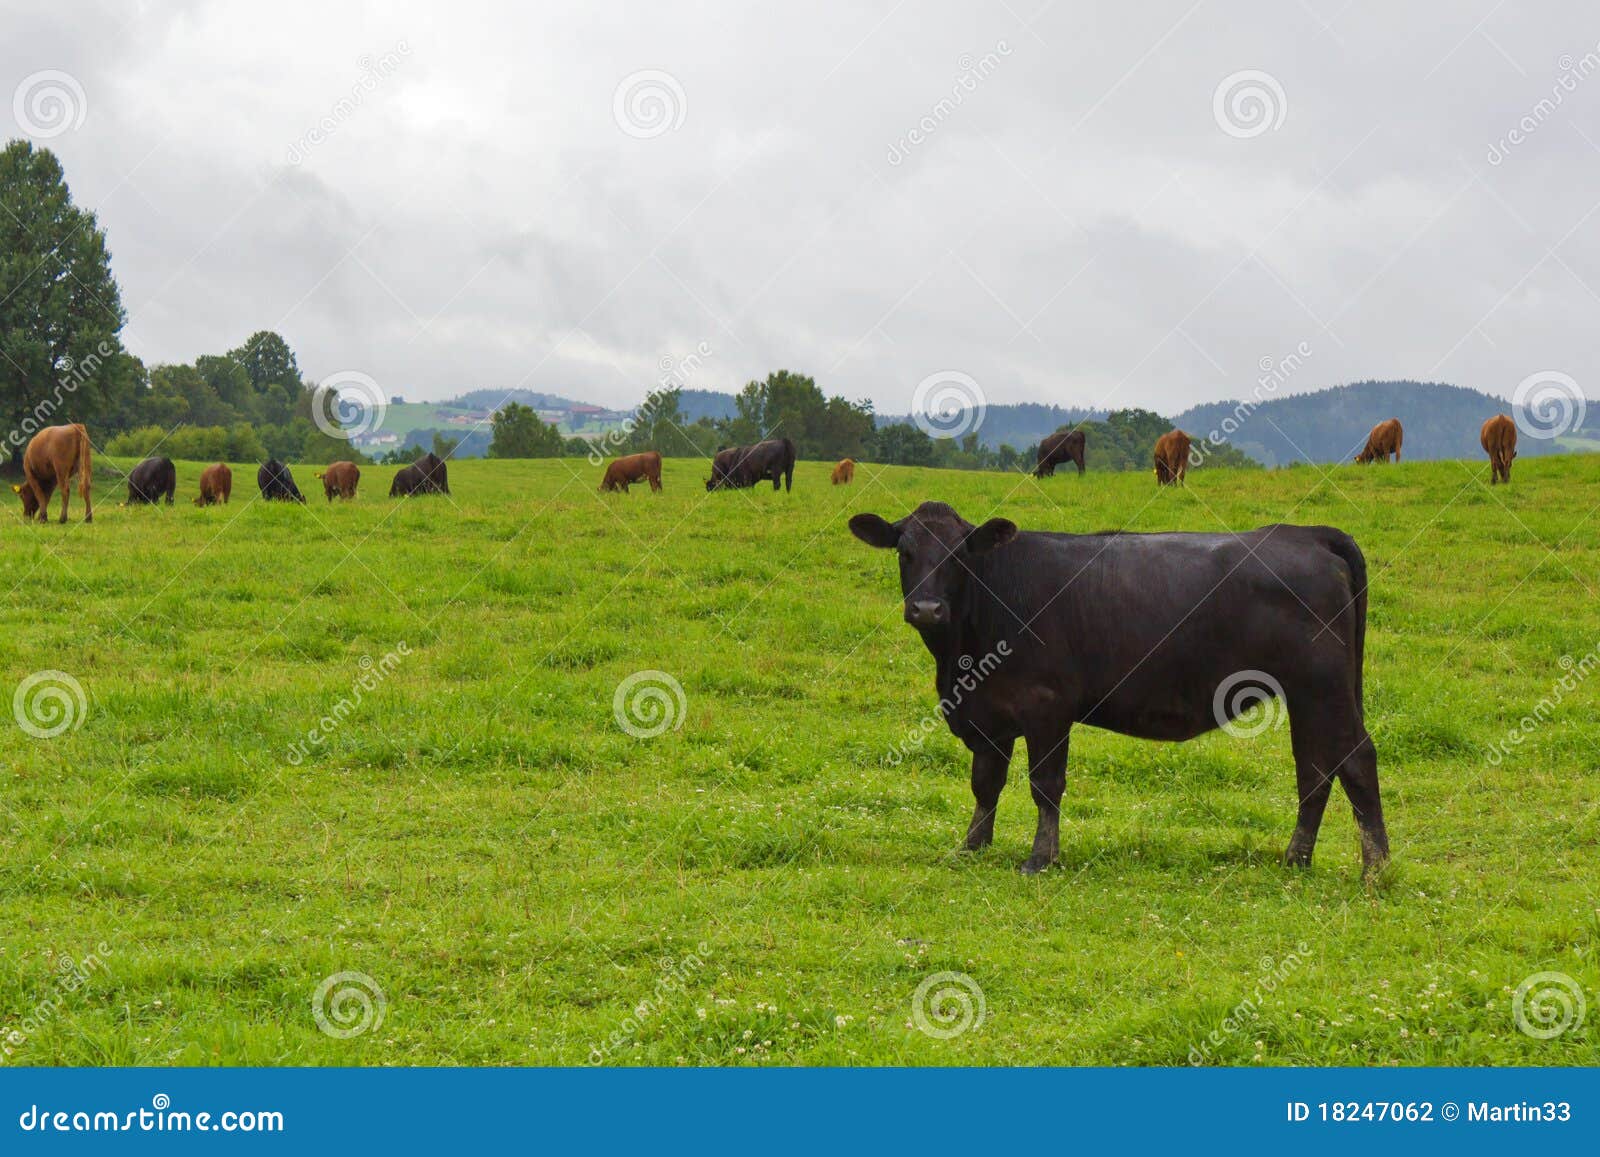 bull on pasture